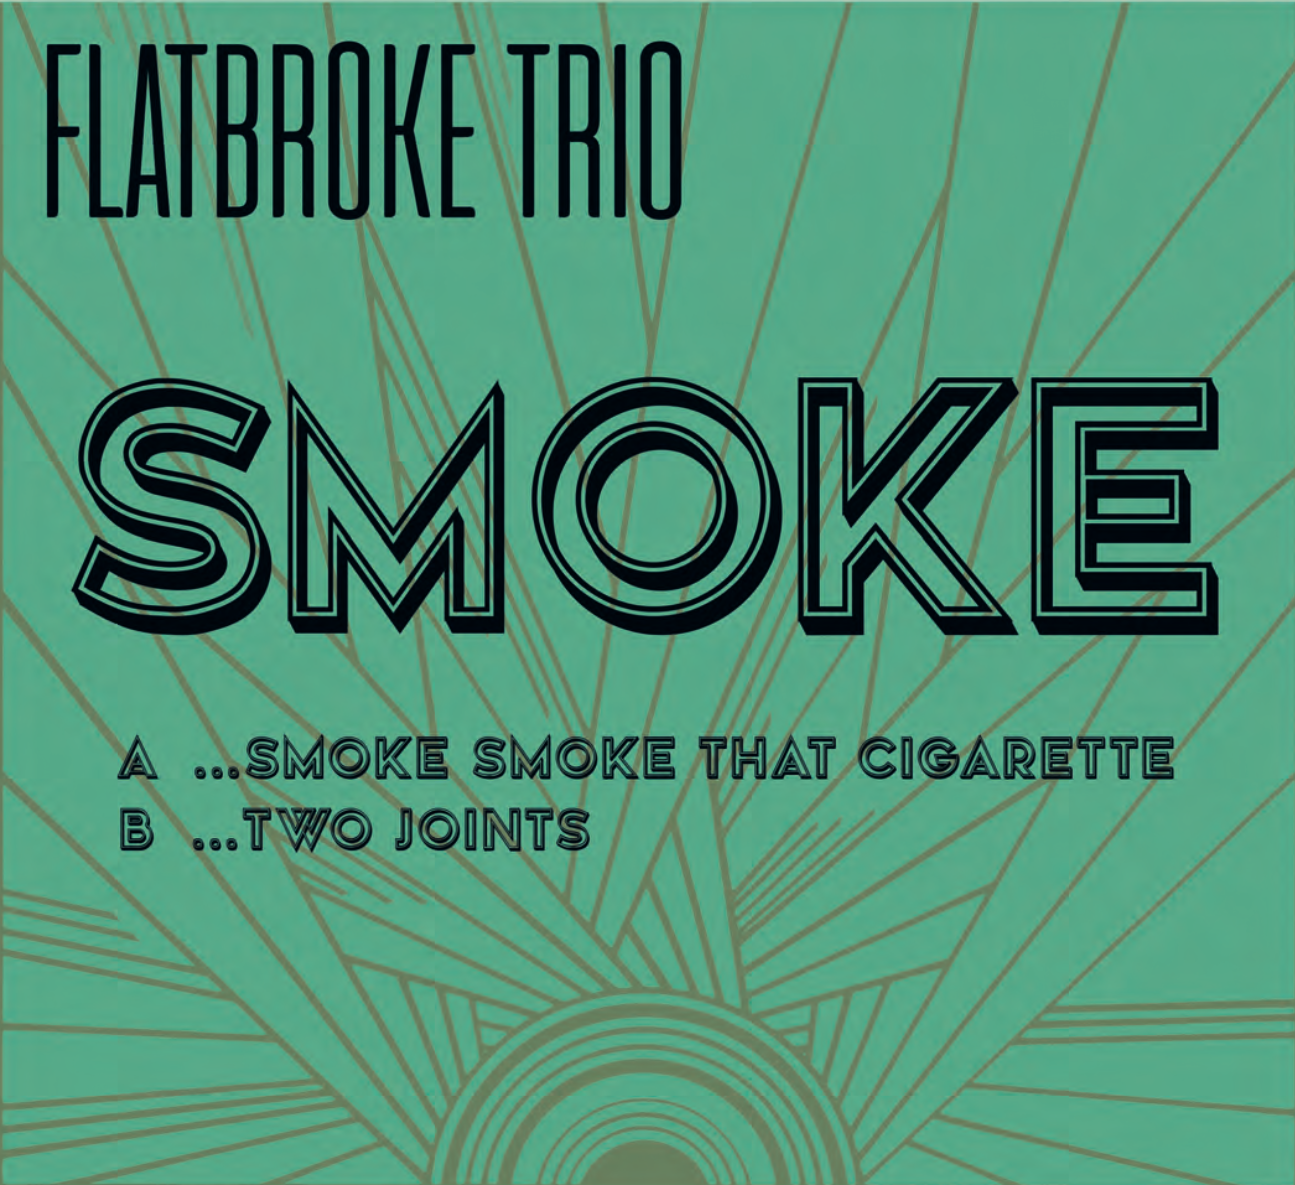 Flatbroke Trio - Smoke